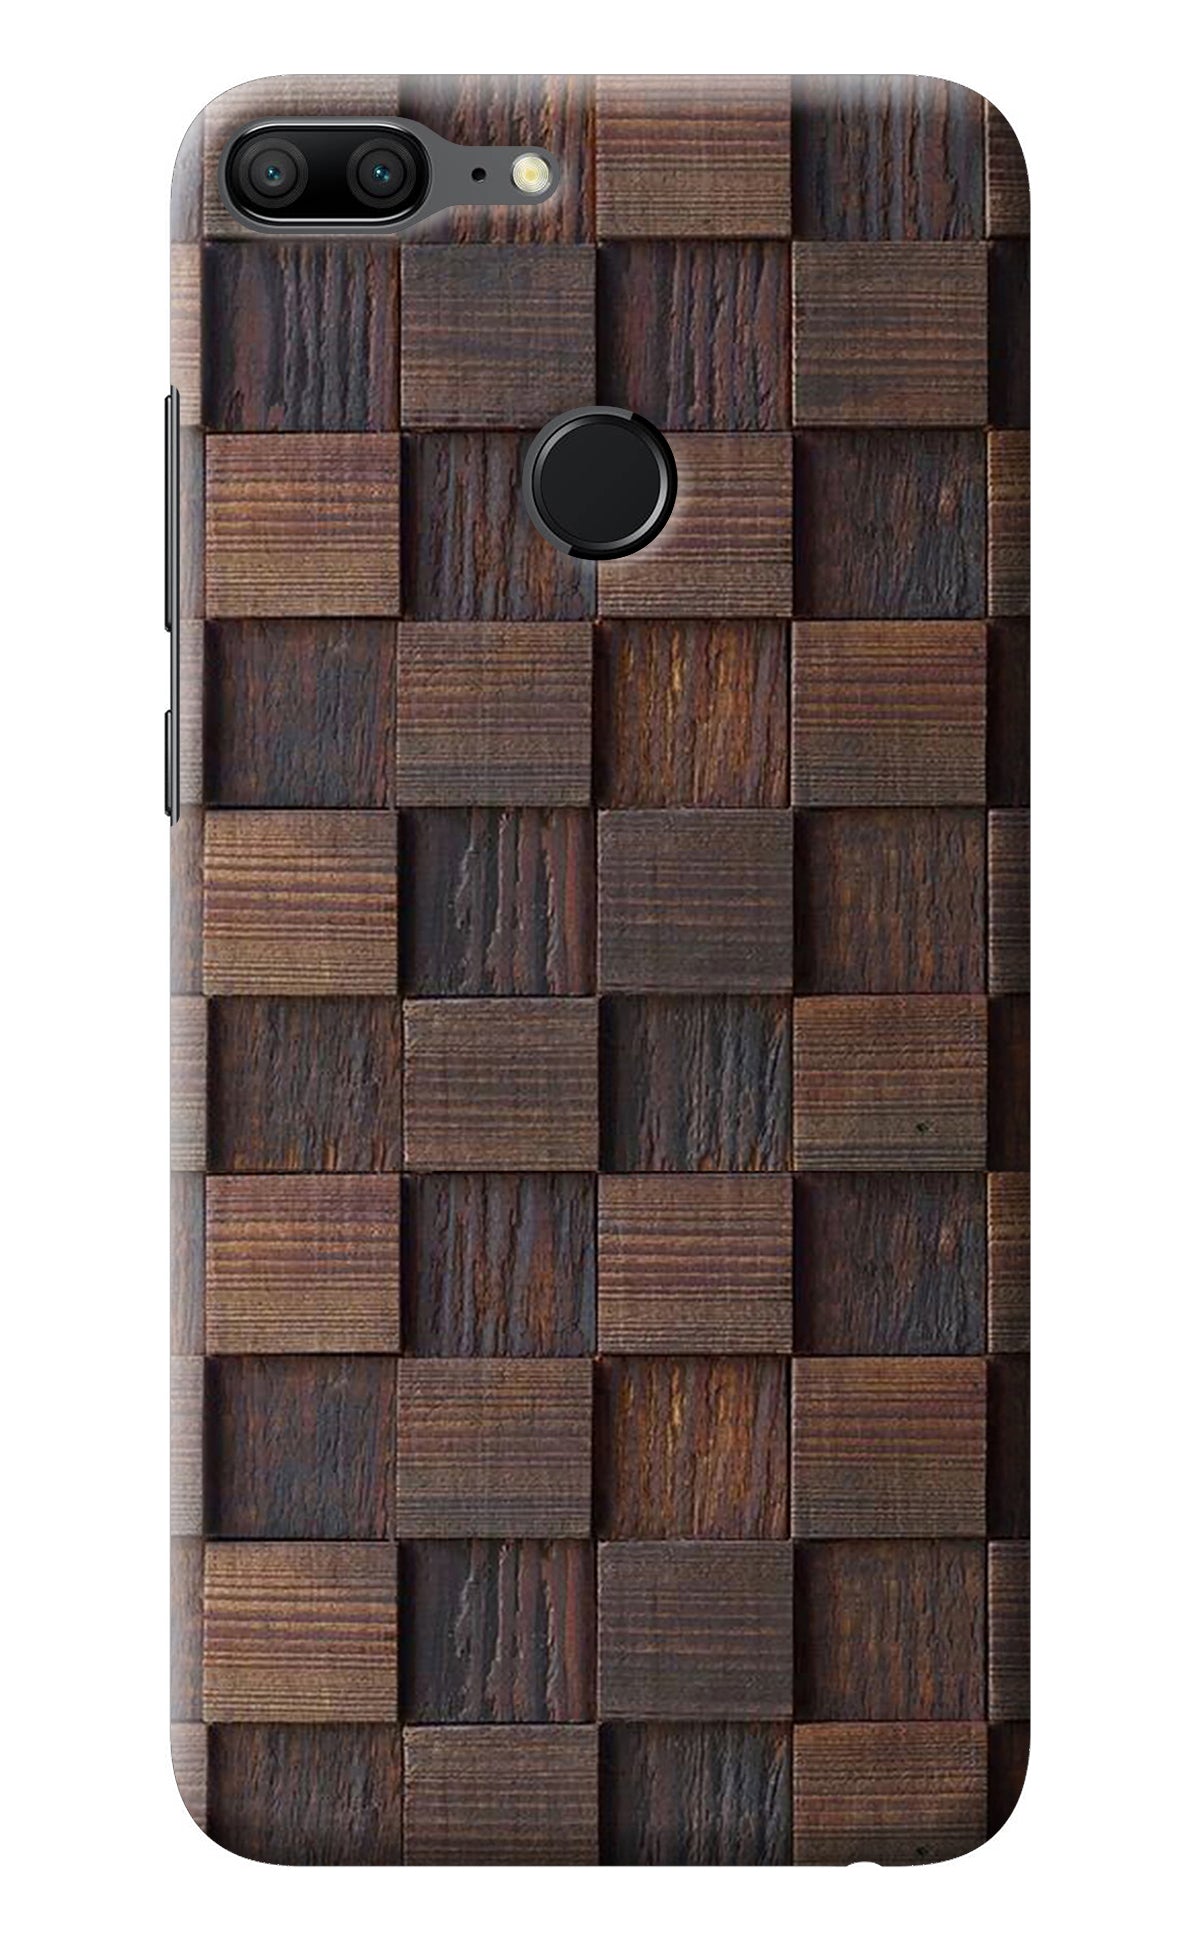 Wooden Cube Design Honor 9 Lite Back Cover